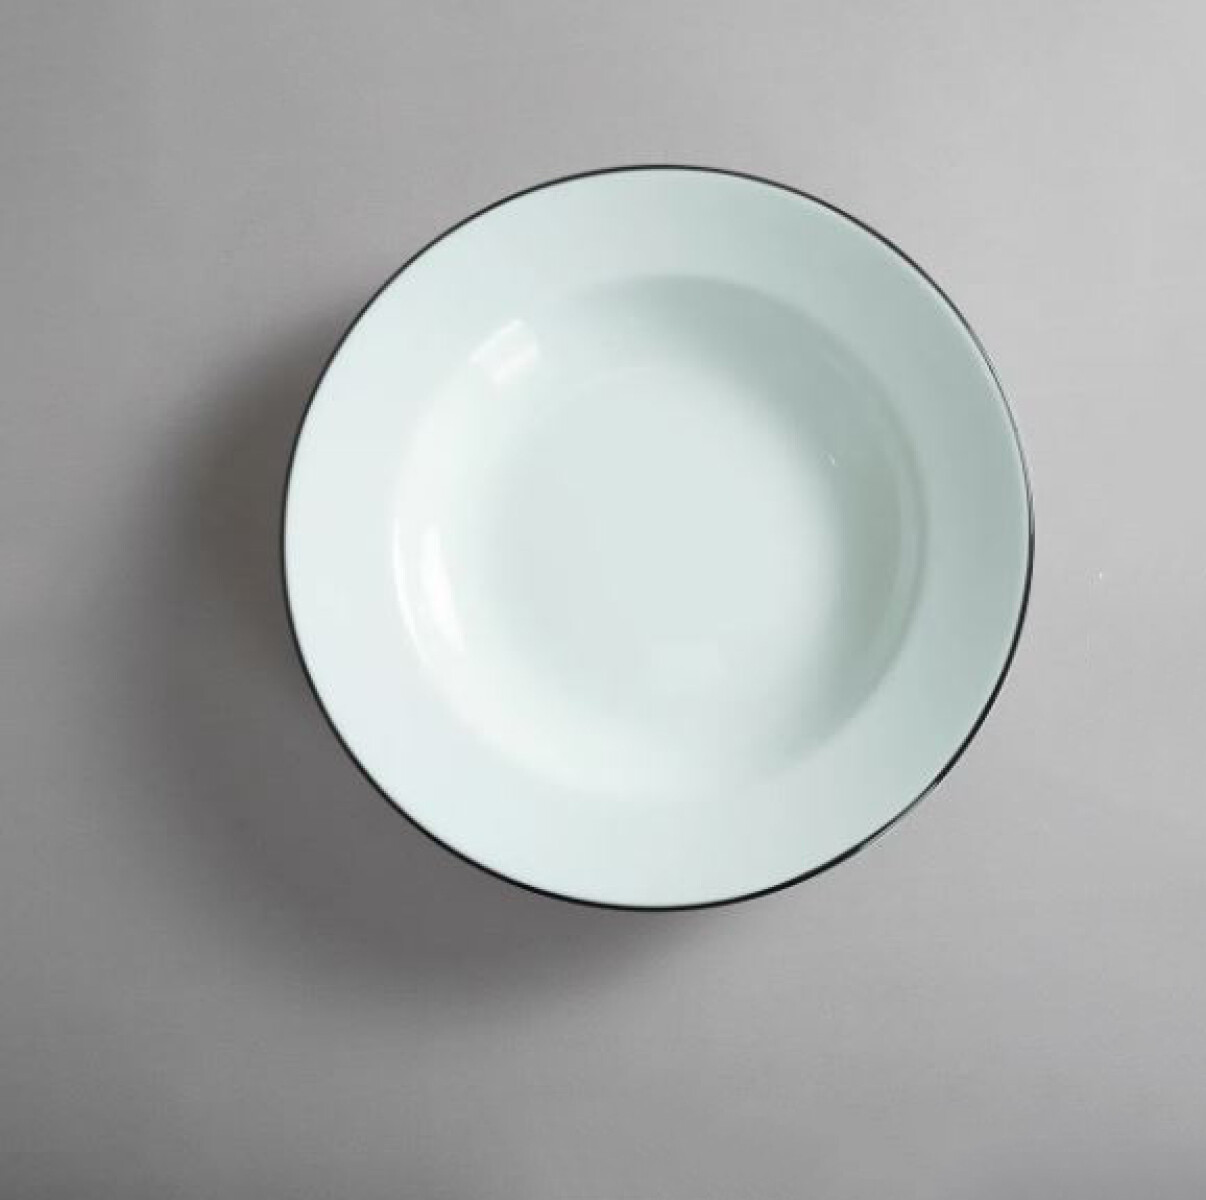 Plato Hondo con Ala 23.5 cm Con Filete Royal Porcelain | Por Unidad 